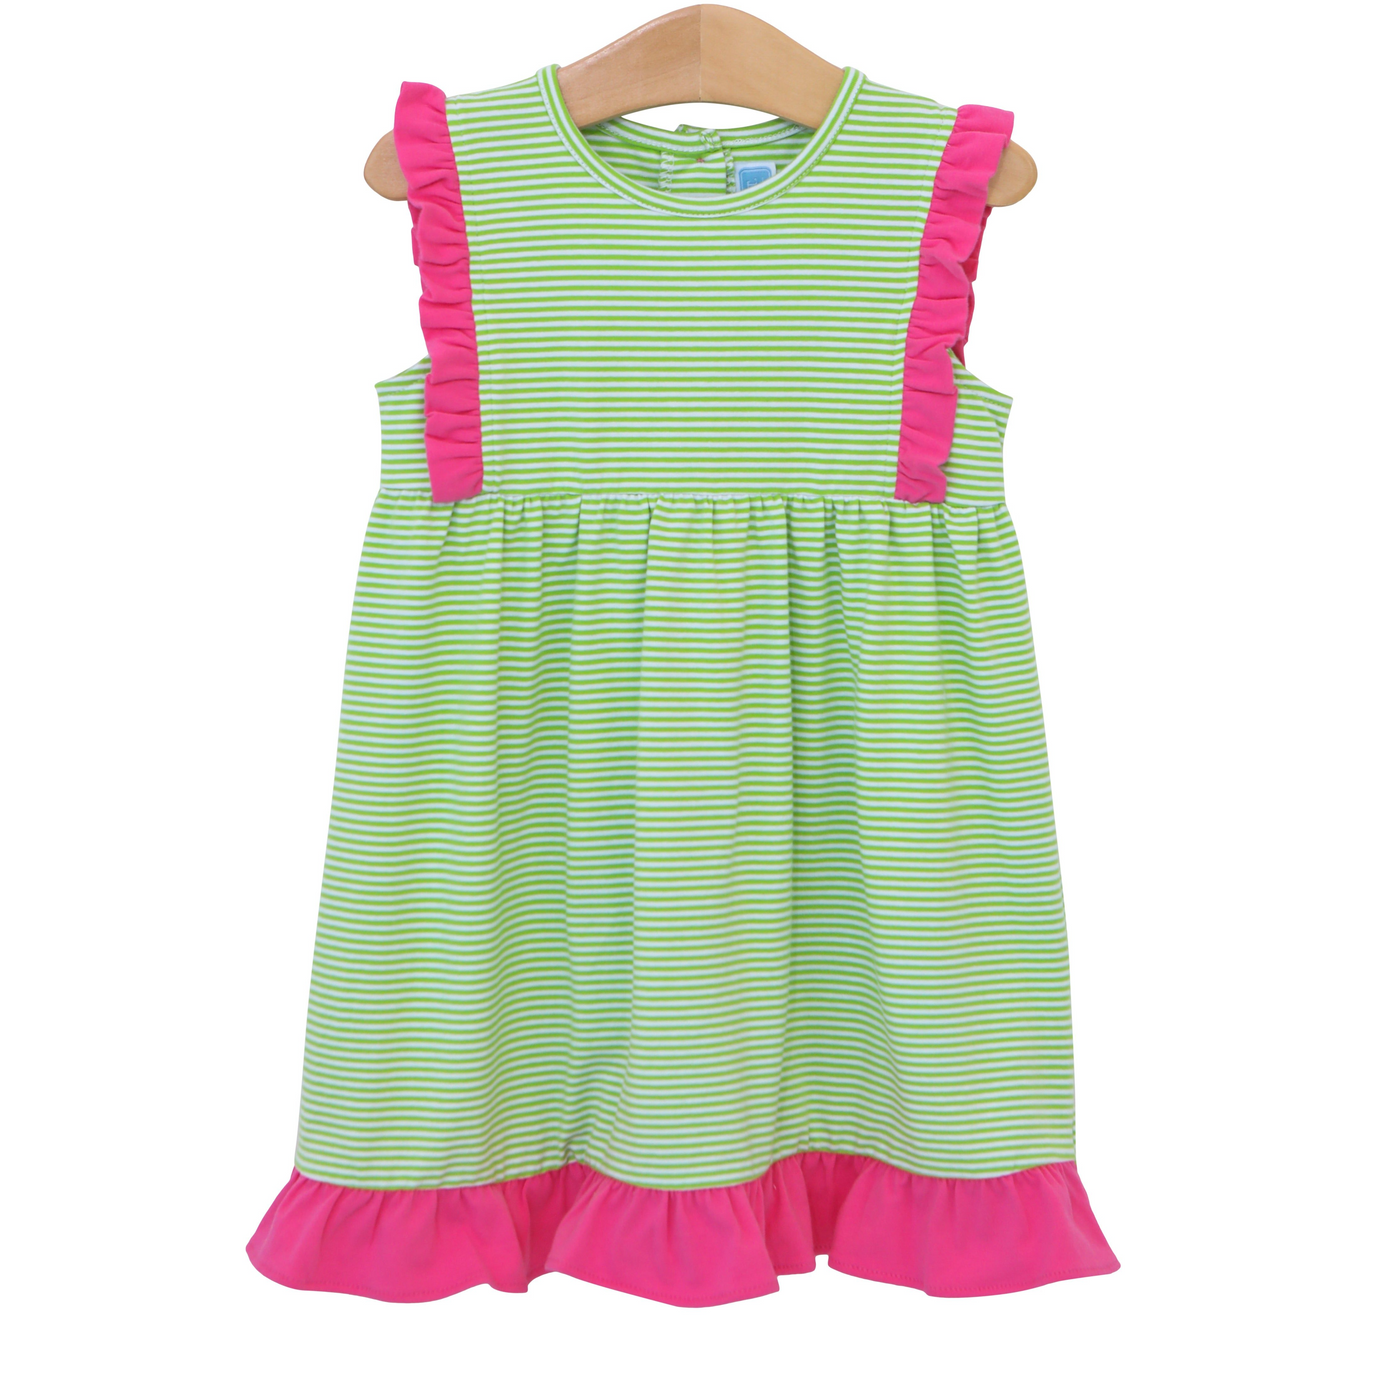 Josie Dress- Lime Green Stripe & Hot Pink